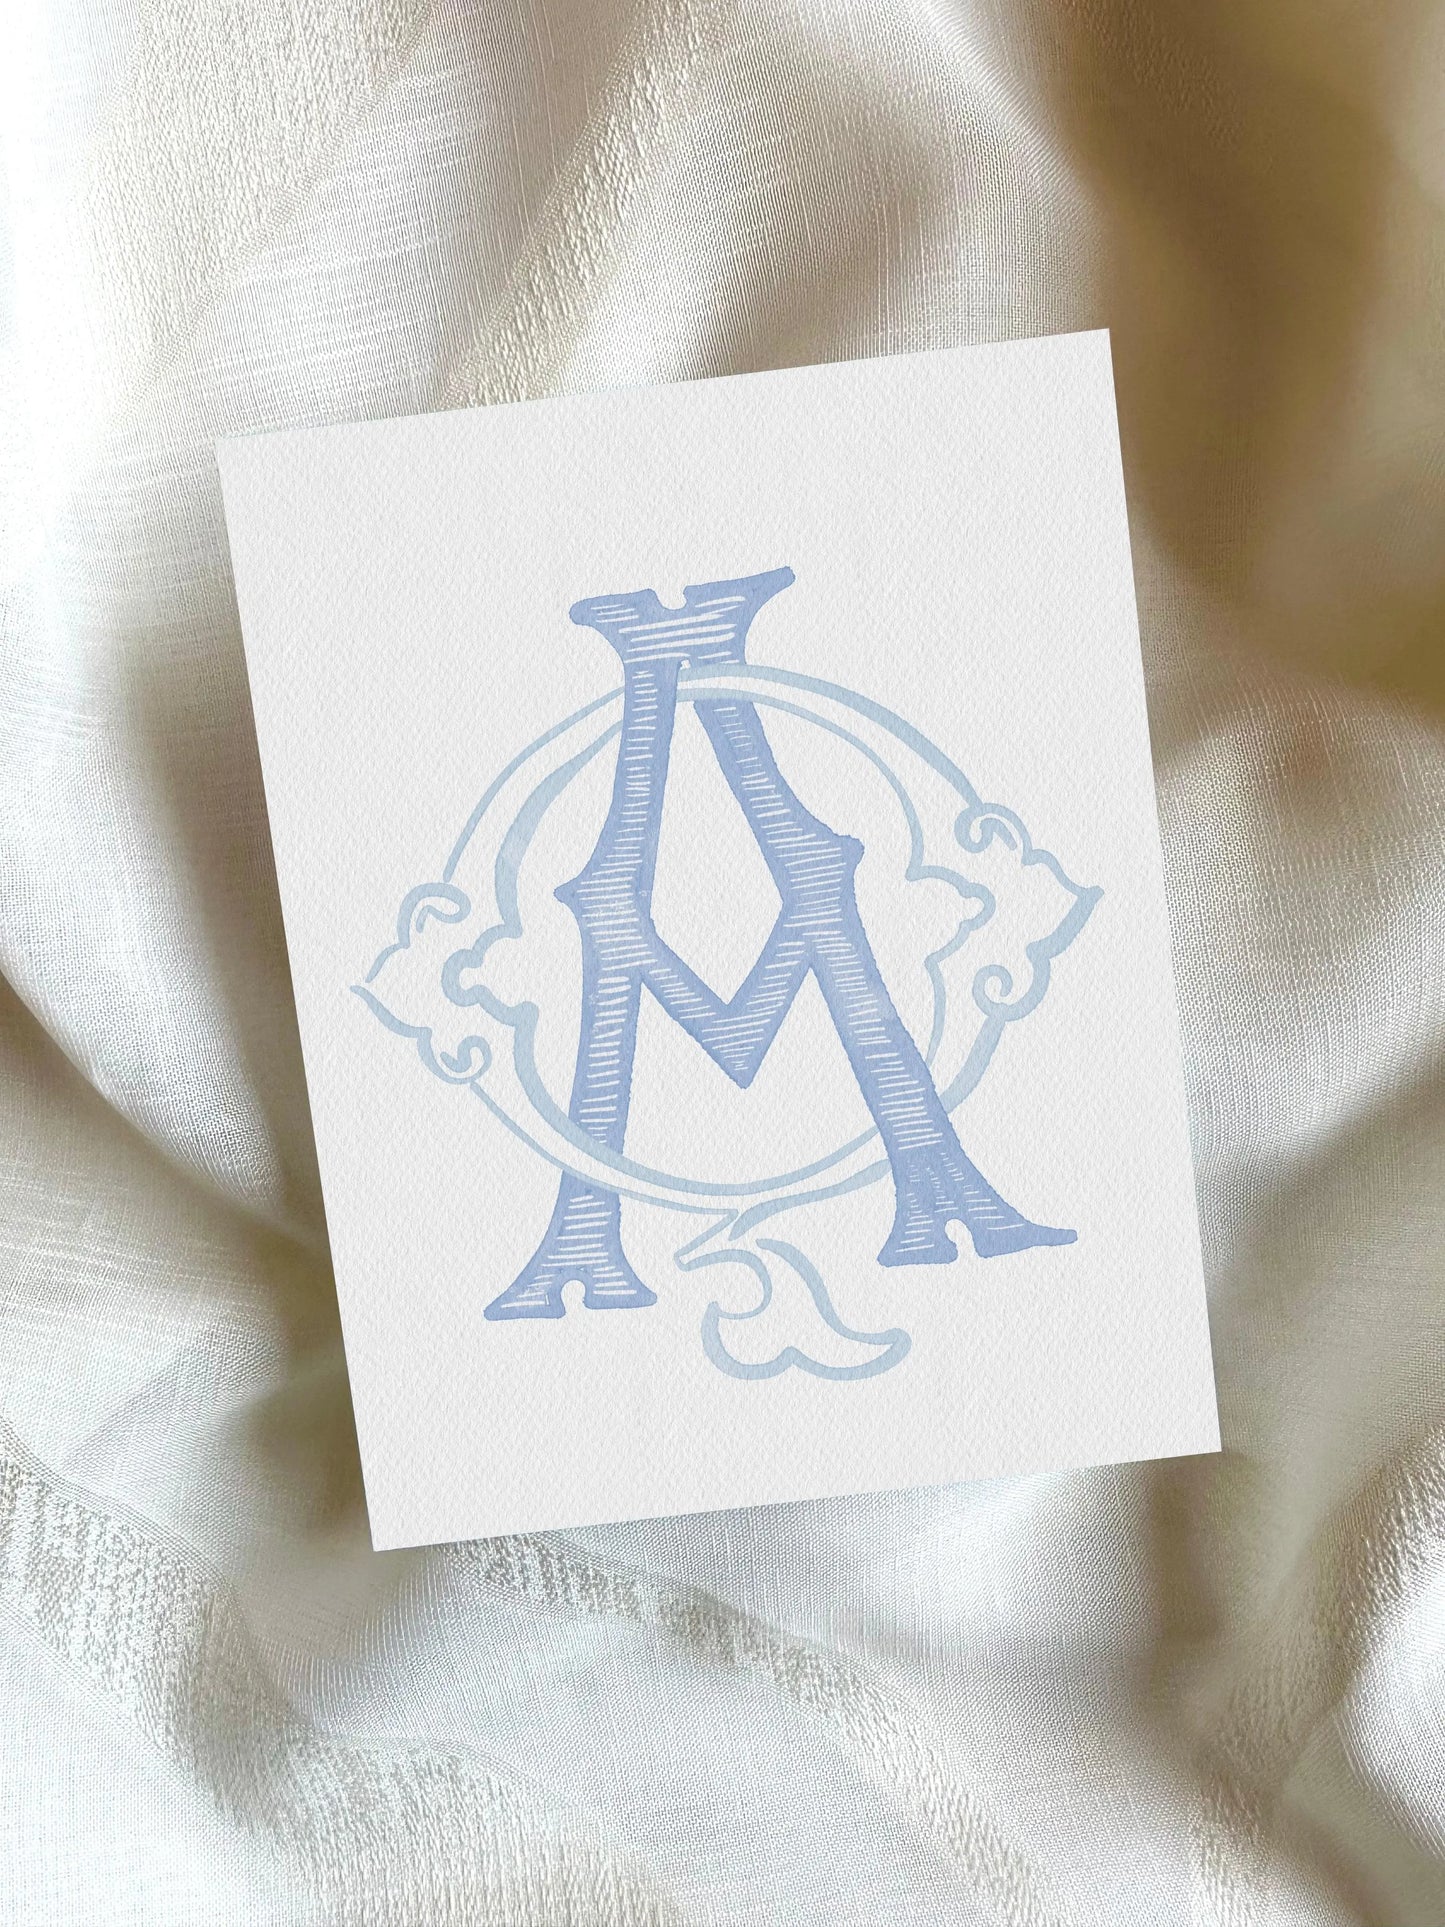 2 Letter Monogram with Letters AQ | Digital Download - Wedding Monogram SVG, Personal Logo, Wedding Logo for Wedding Invitations The Wedding Crest Lab